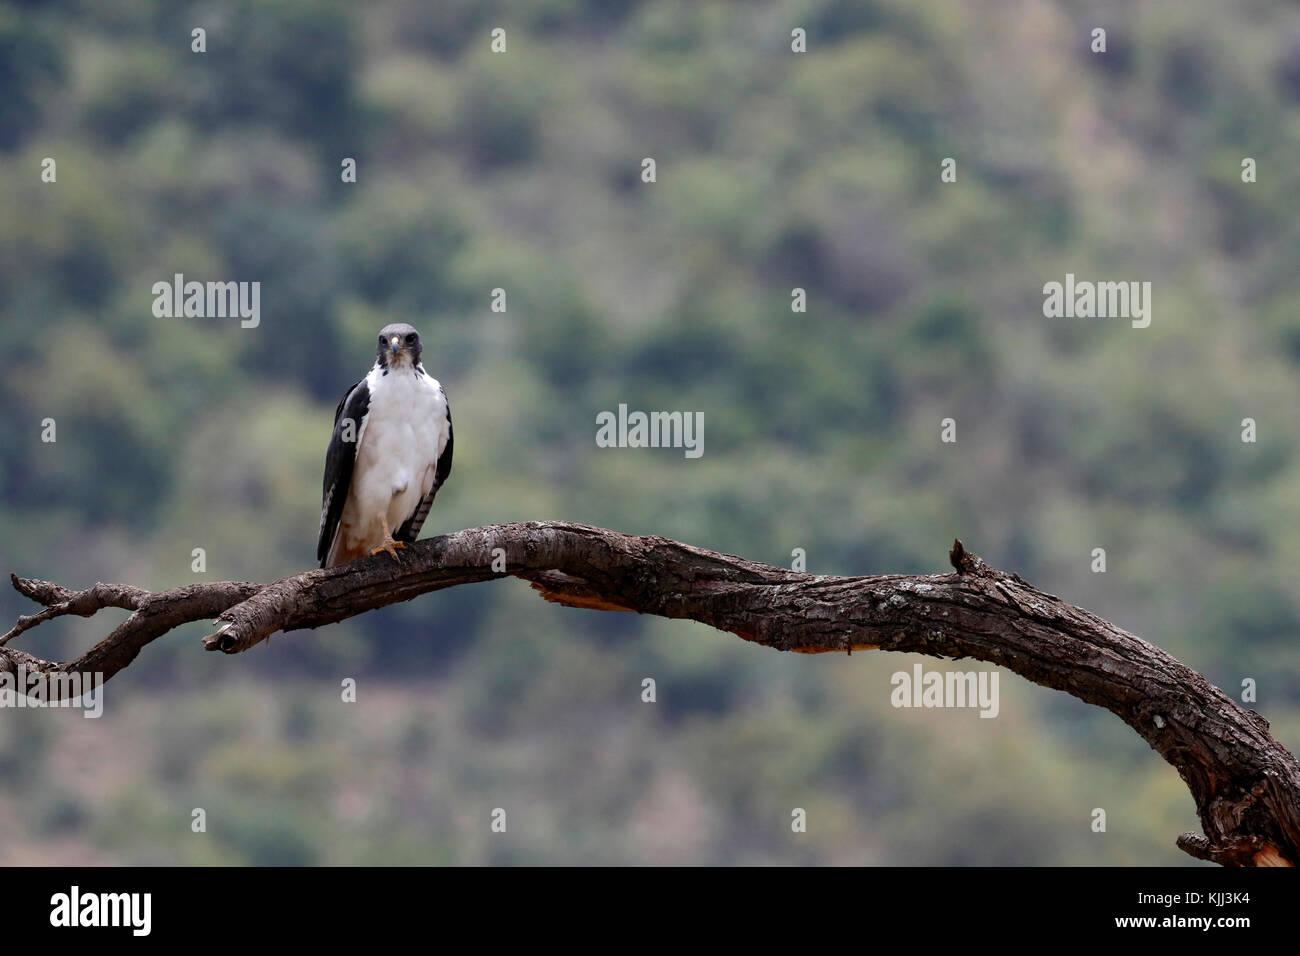 Le Masai Mara. Au Kenya. Faucon pèlerin - Falco peregrinus. Banque D'Images